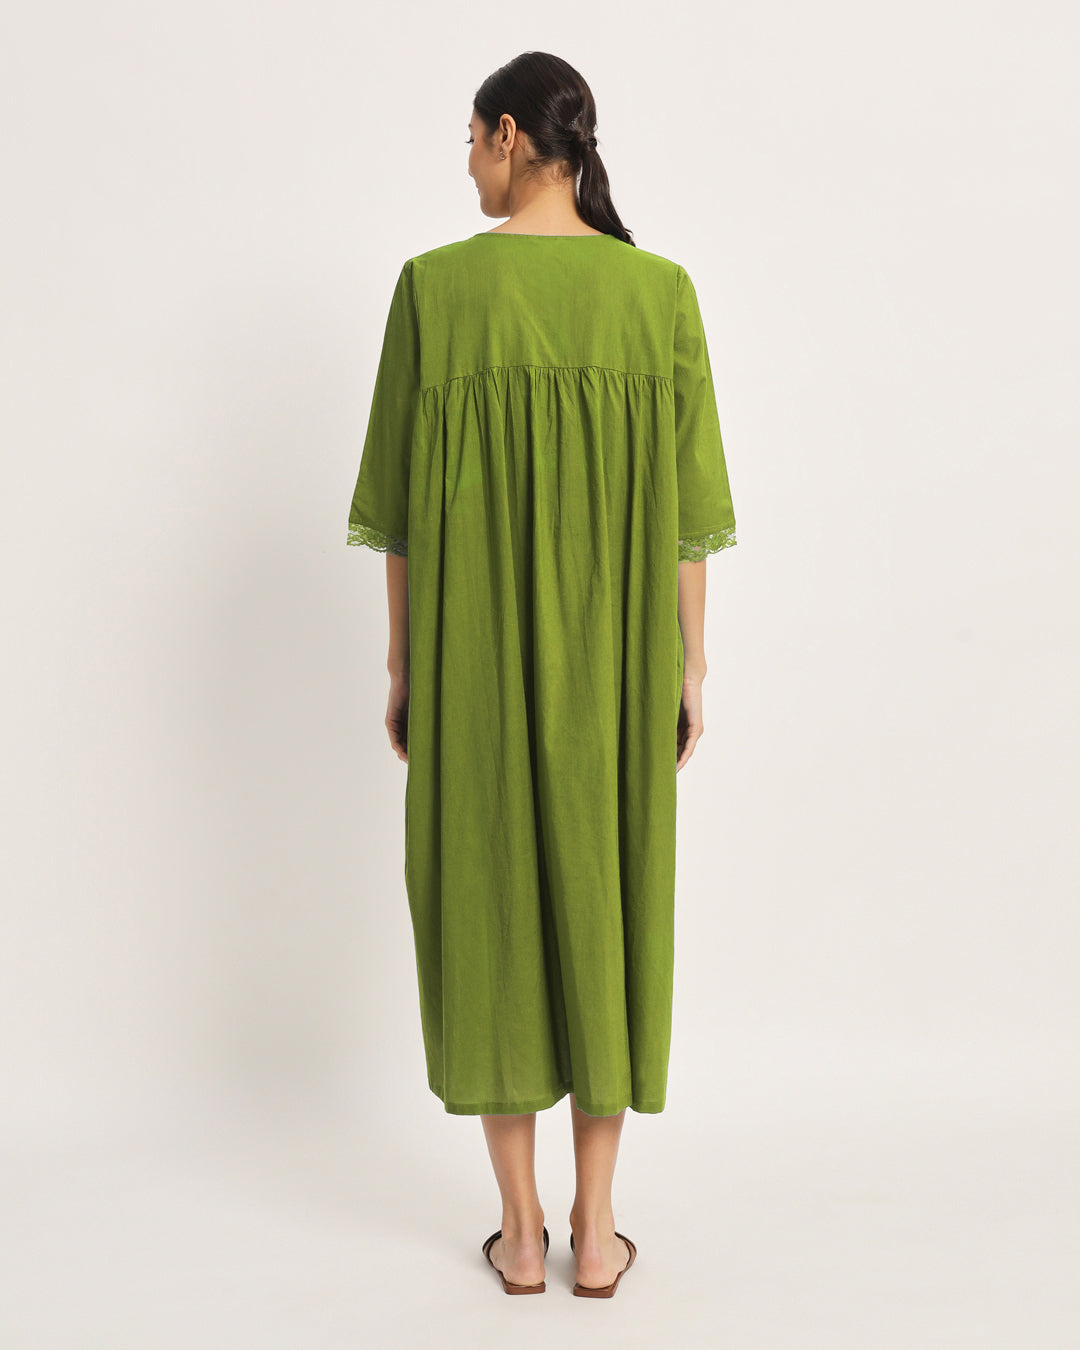 Combo: Iced Grey & Sage Green Stylish Preggo Maternity & Nursing Dress - Set of 2